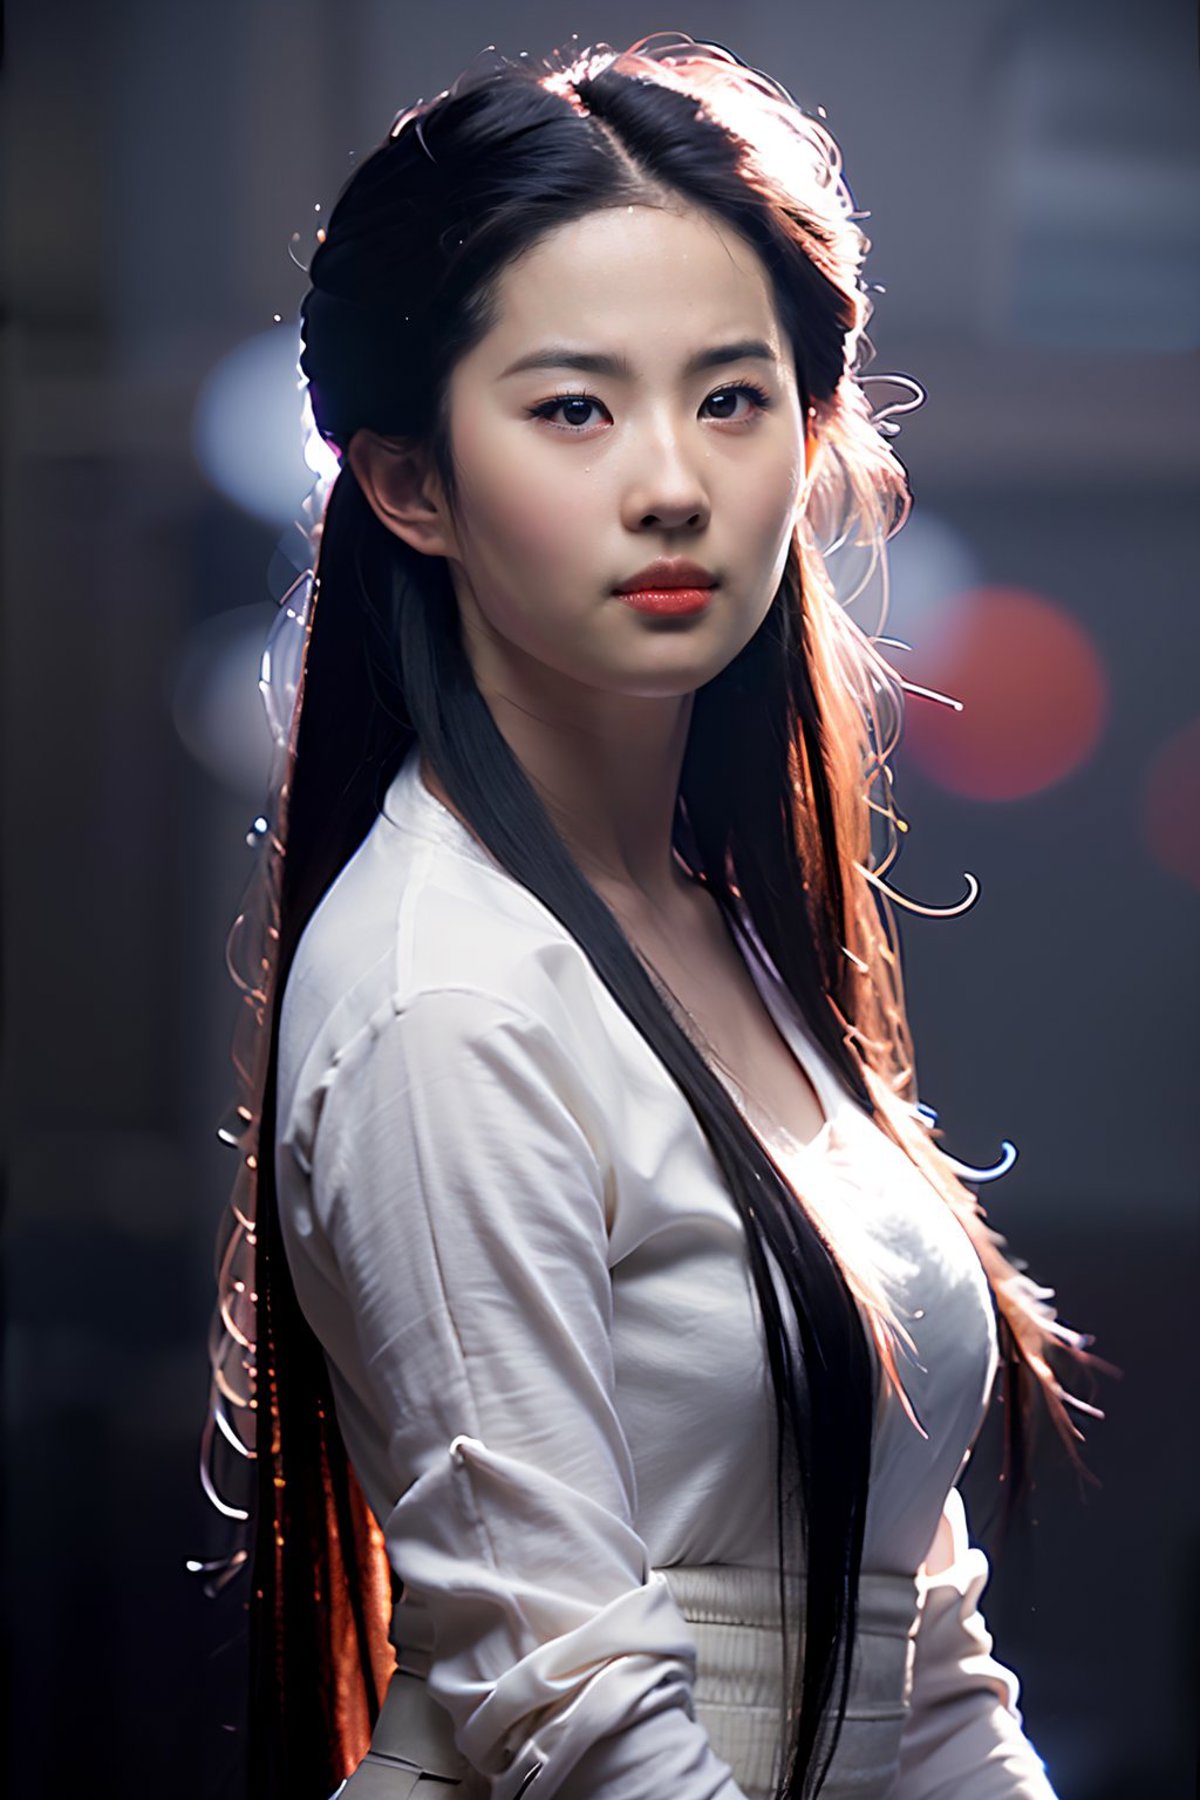 Liu yifei young | 刘亦菲少女时期 | 神仙姐姐 image by orcface